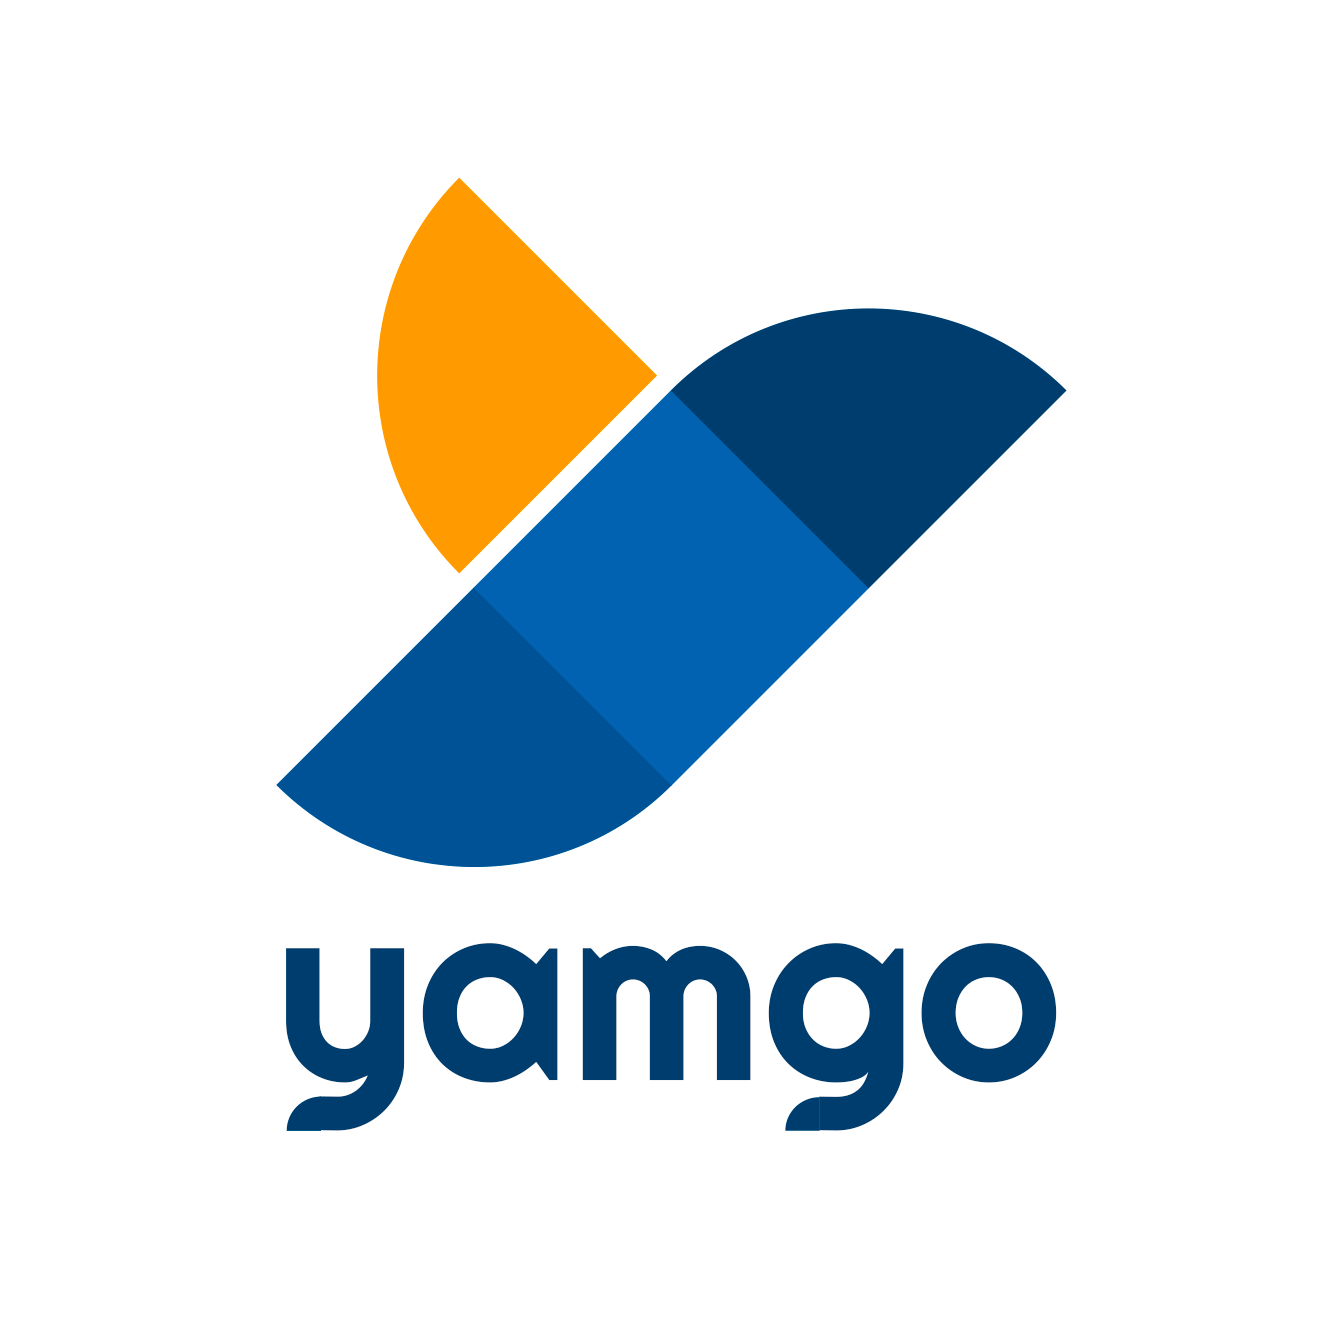 Yamgo